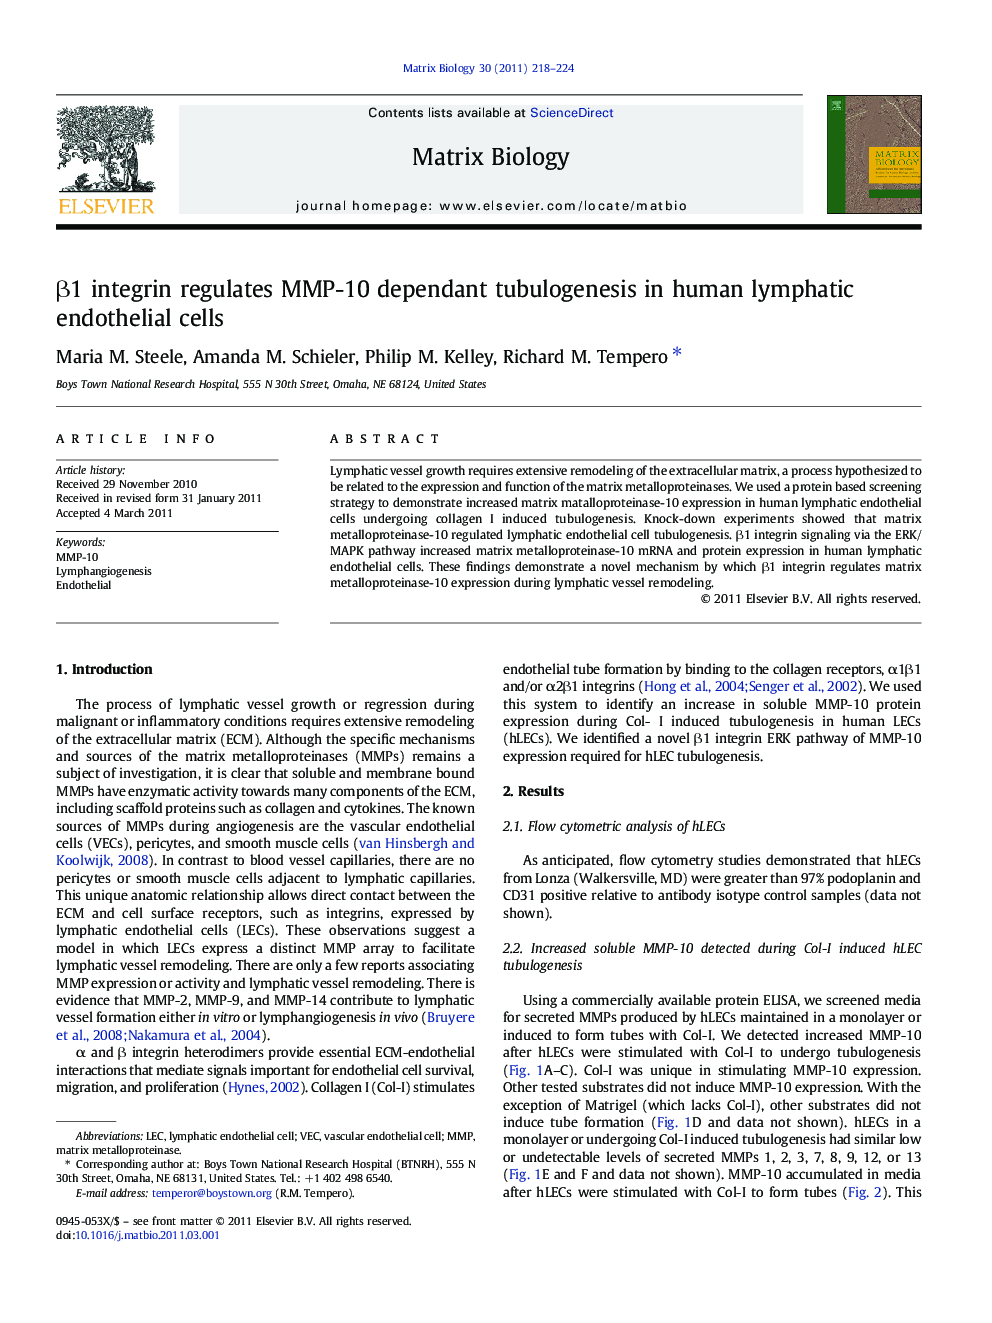 Î²1 integrin regulates MMP-10 dependant tubulogenesis in human lymphatic endothelial cells